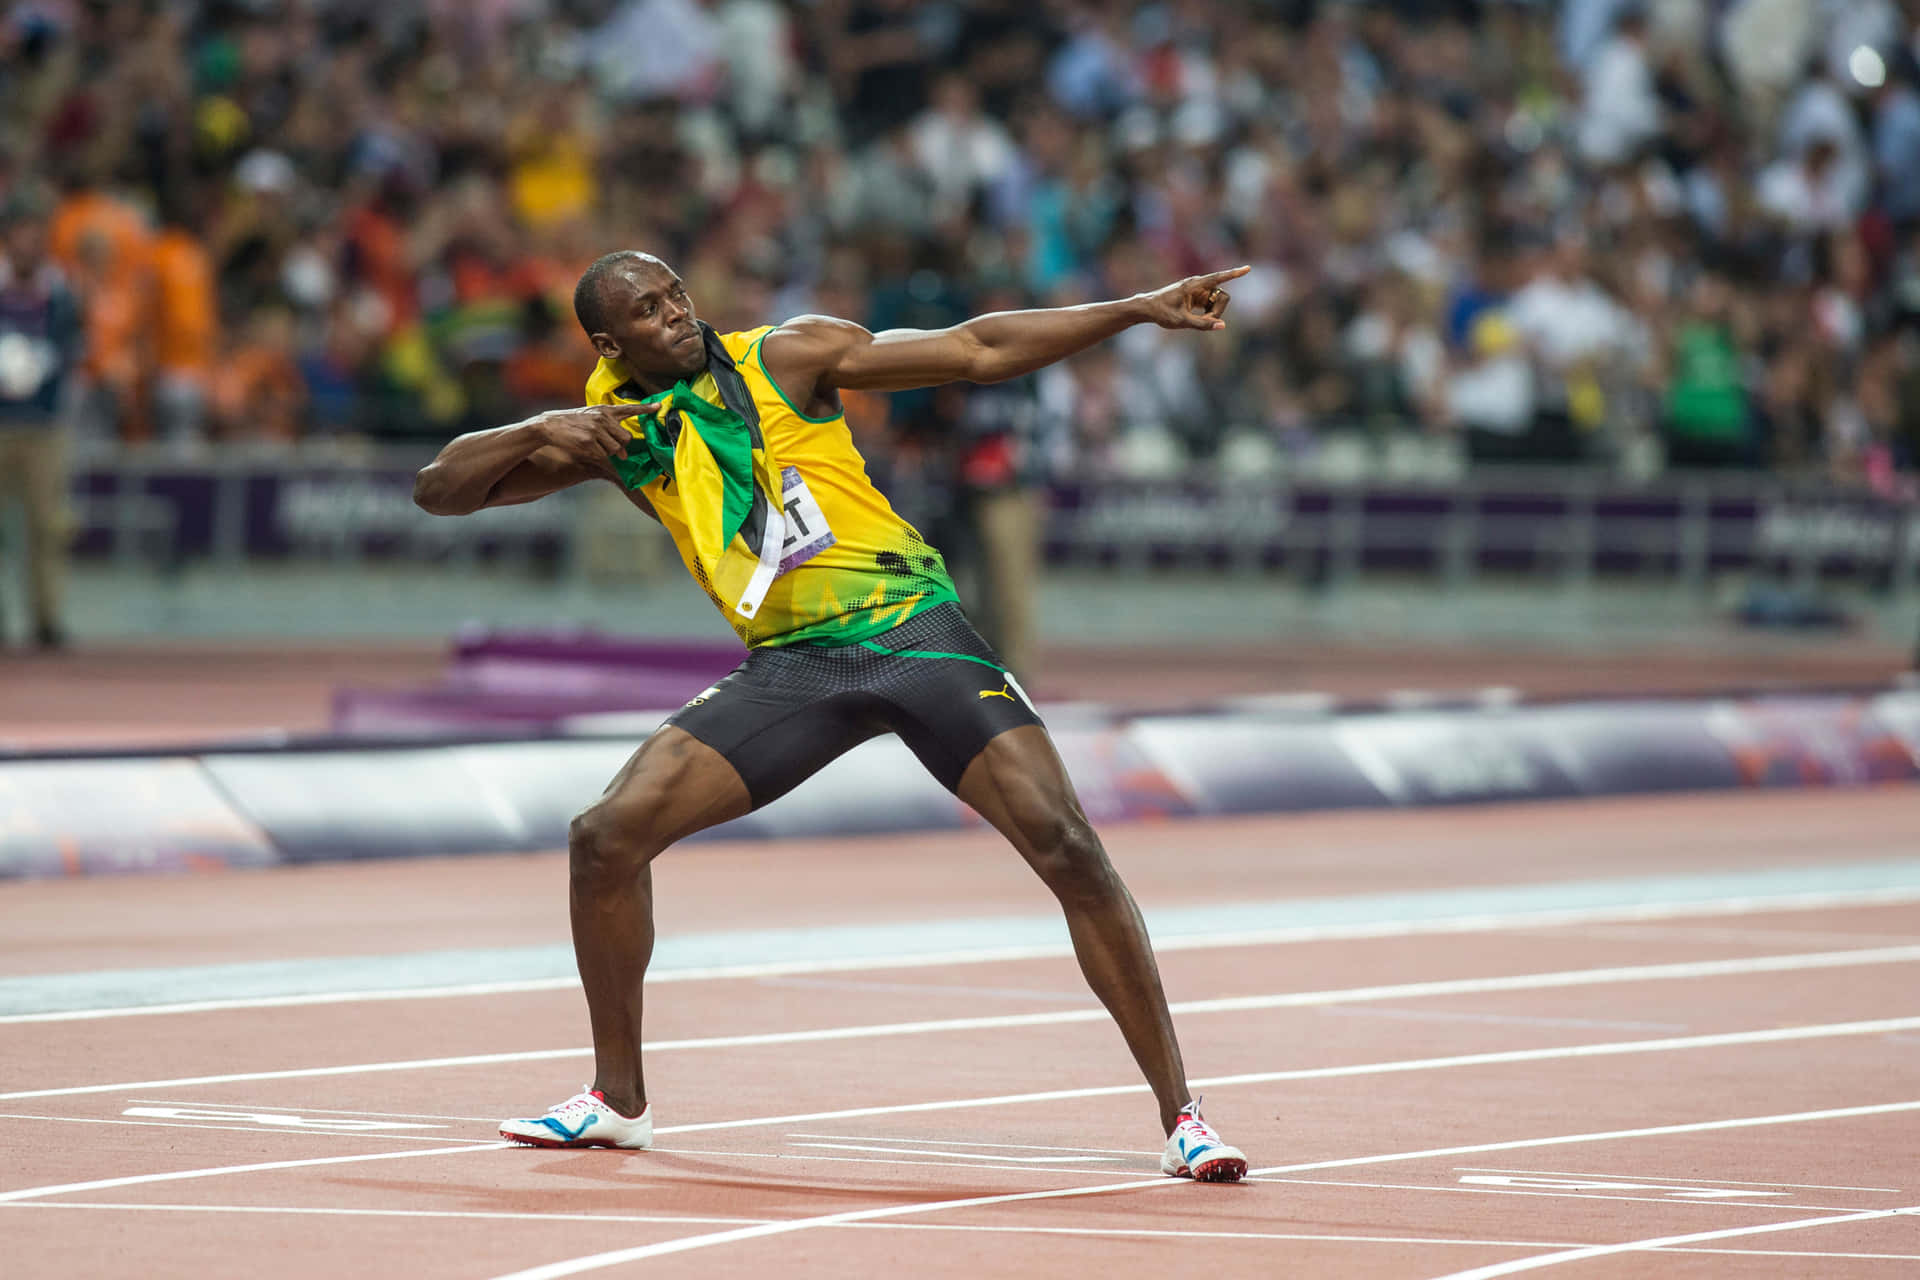 WATCH: Usain Bolt does trademark 'Lightning Bolt' pose after scoring first  pro goal